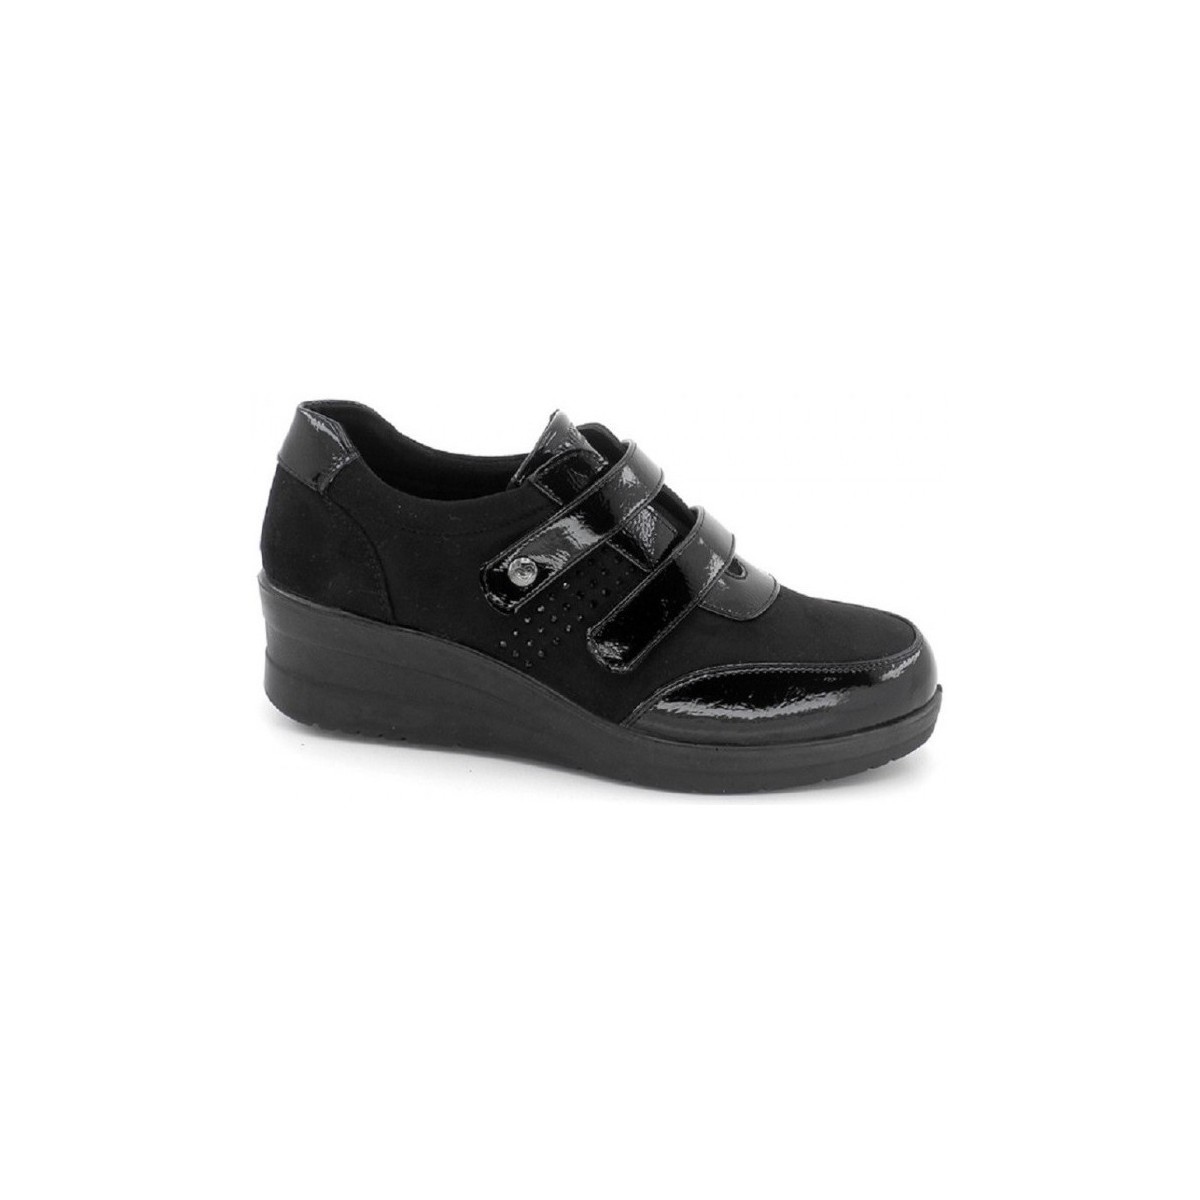 Zapatos Mujer Derbie & Richelieu Amarpies AJH22408 Negro